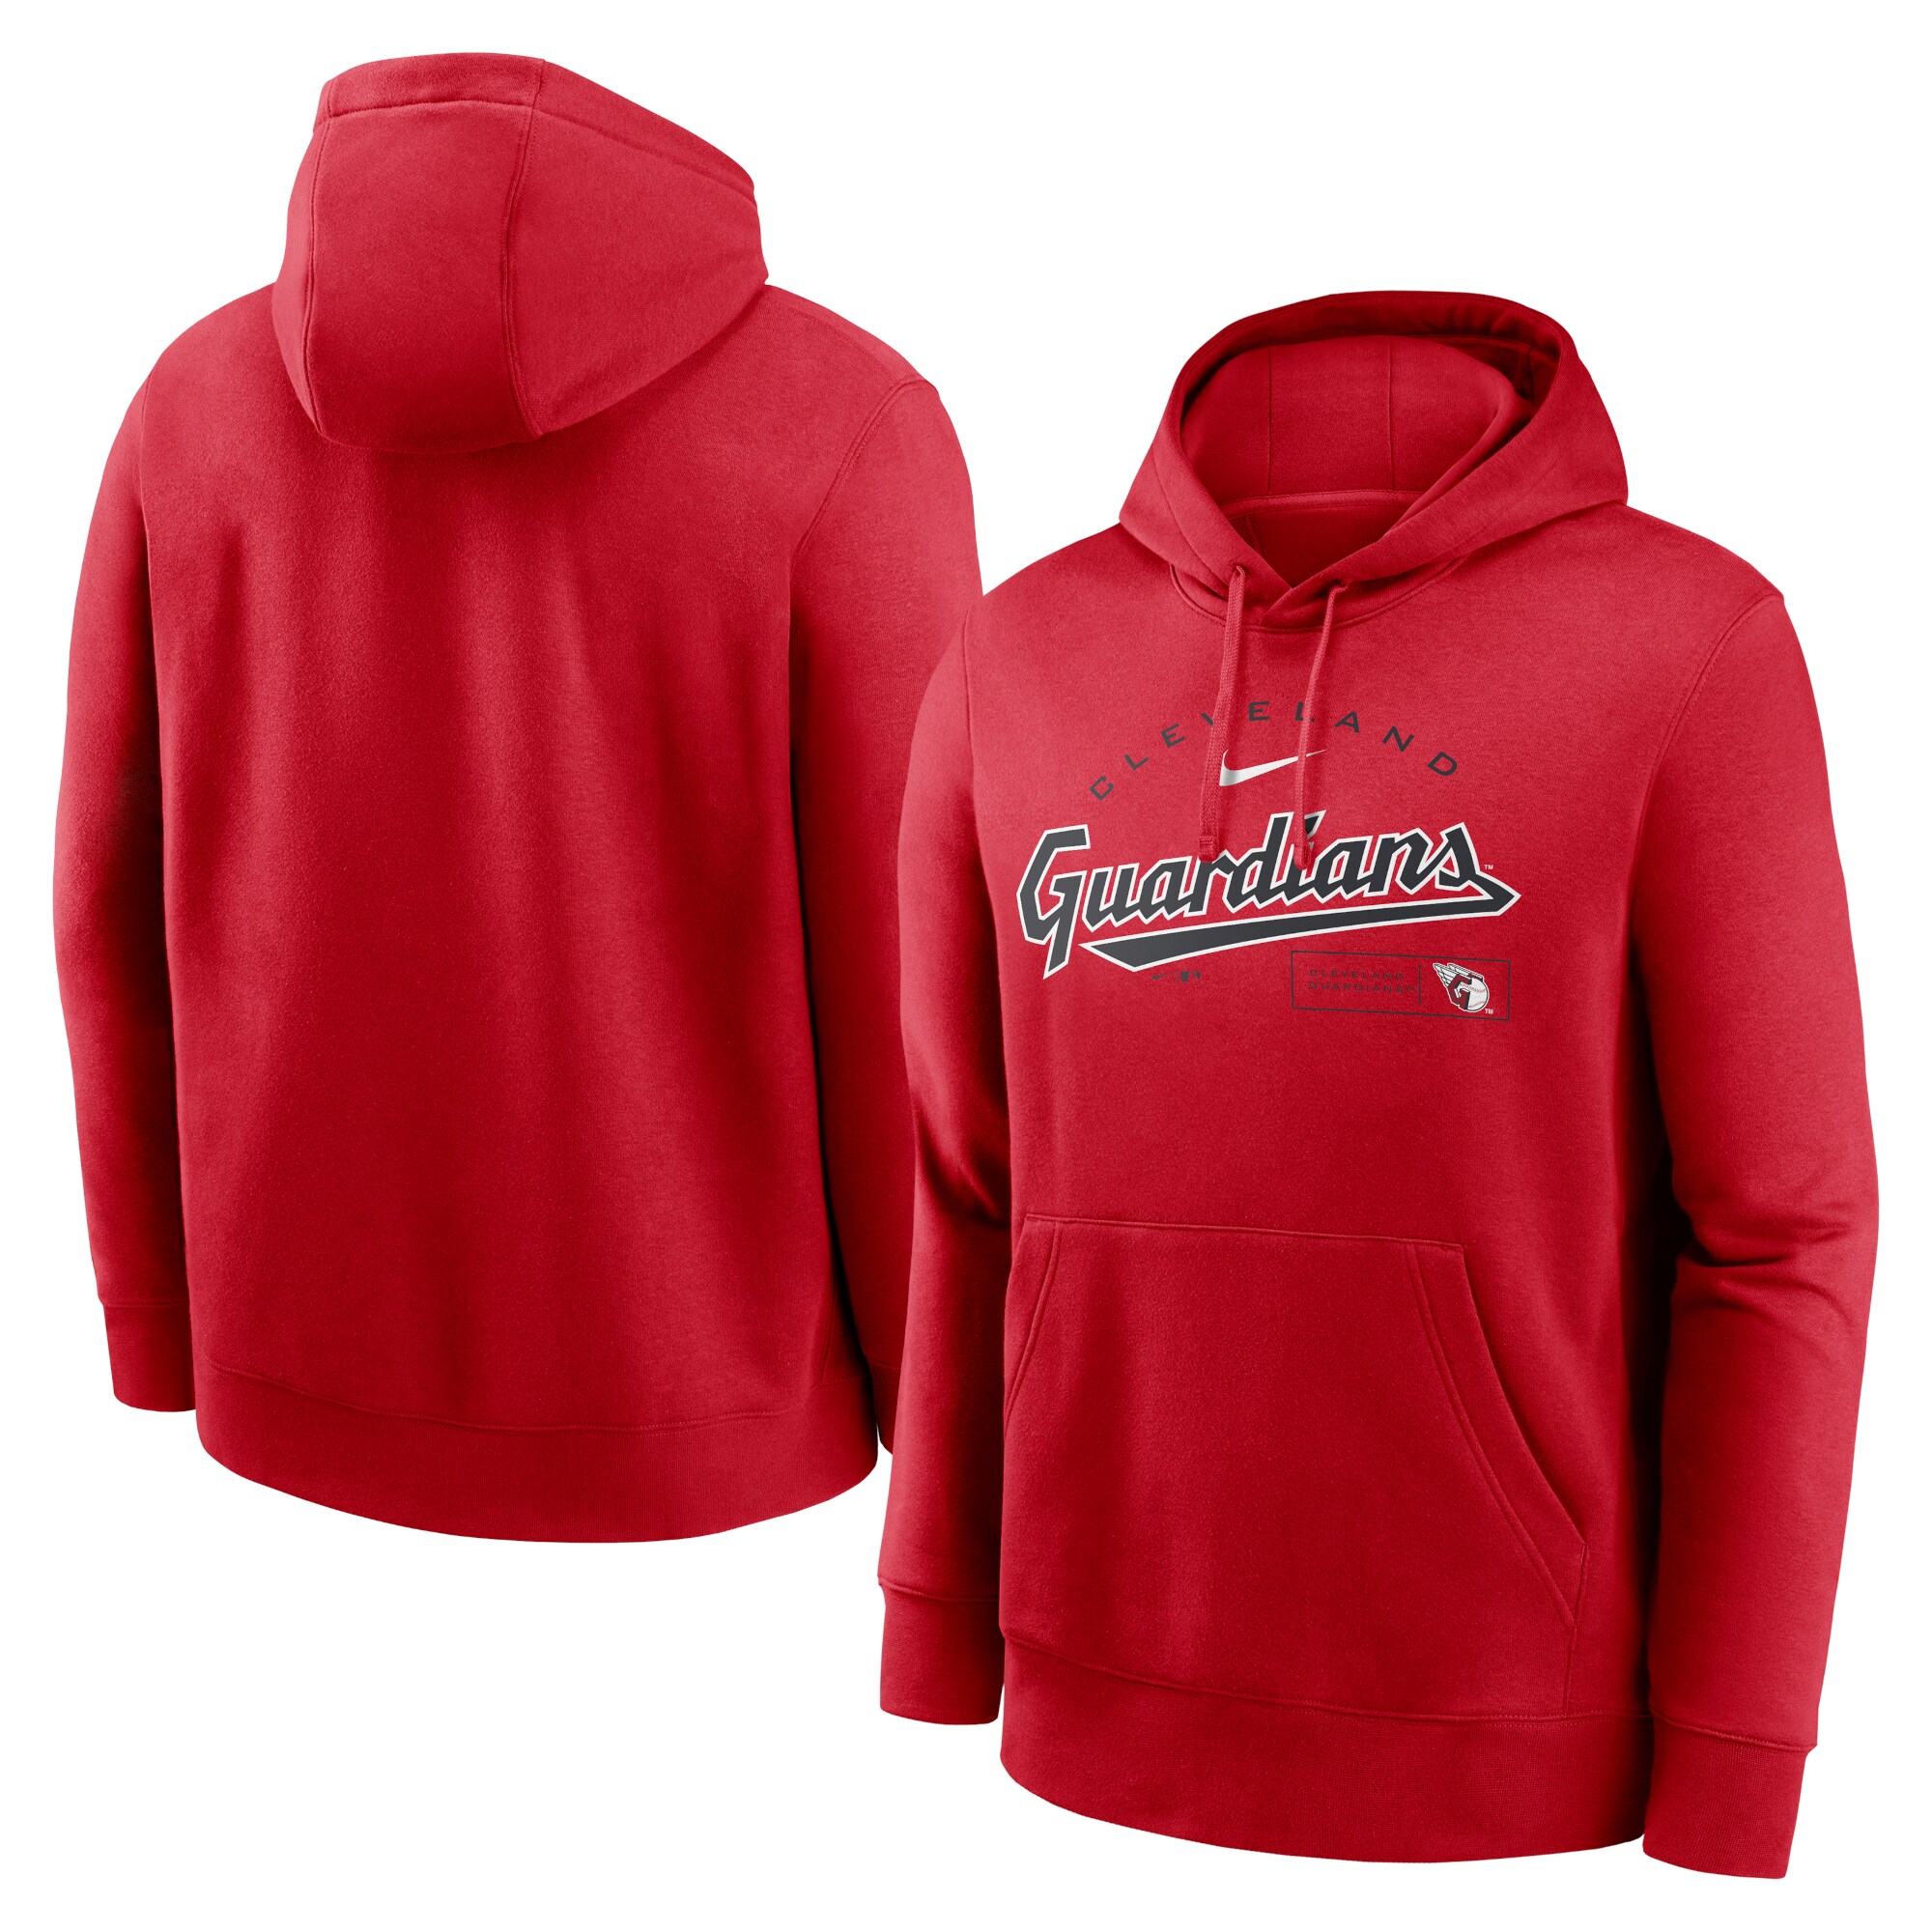 MLB Cleveland Guardians Hoodies & Sweatshirts